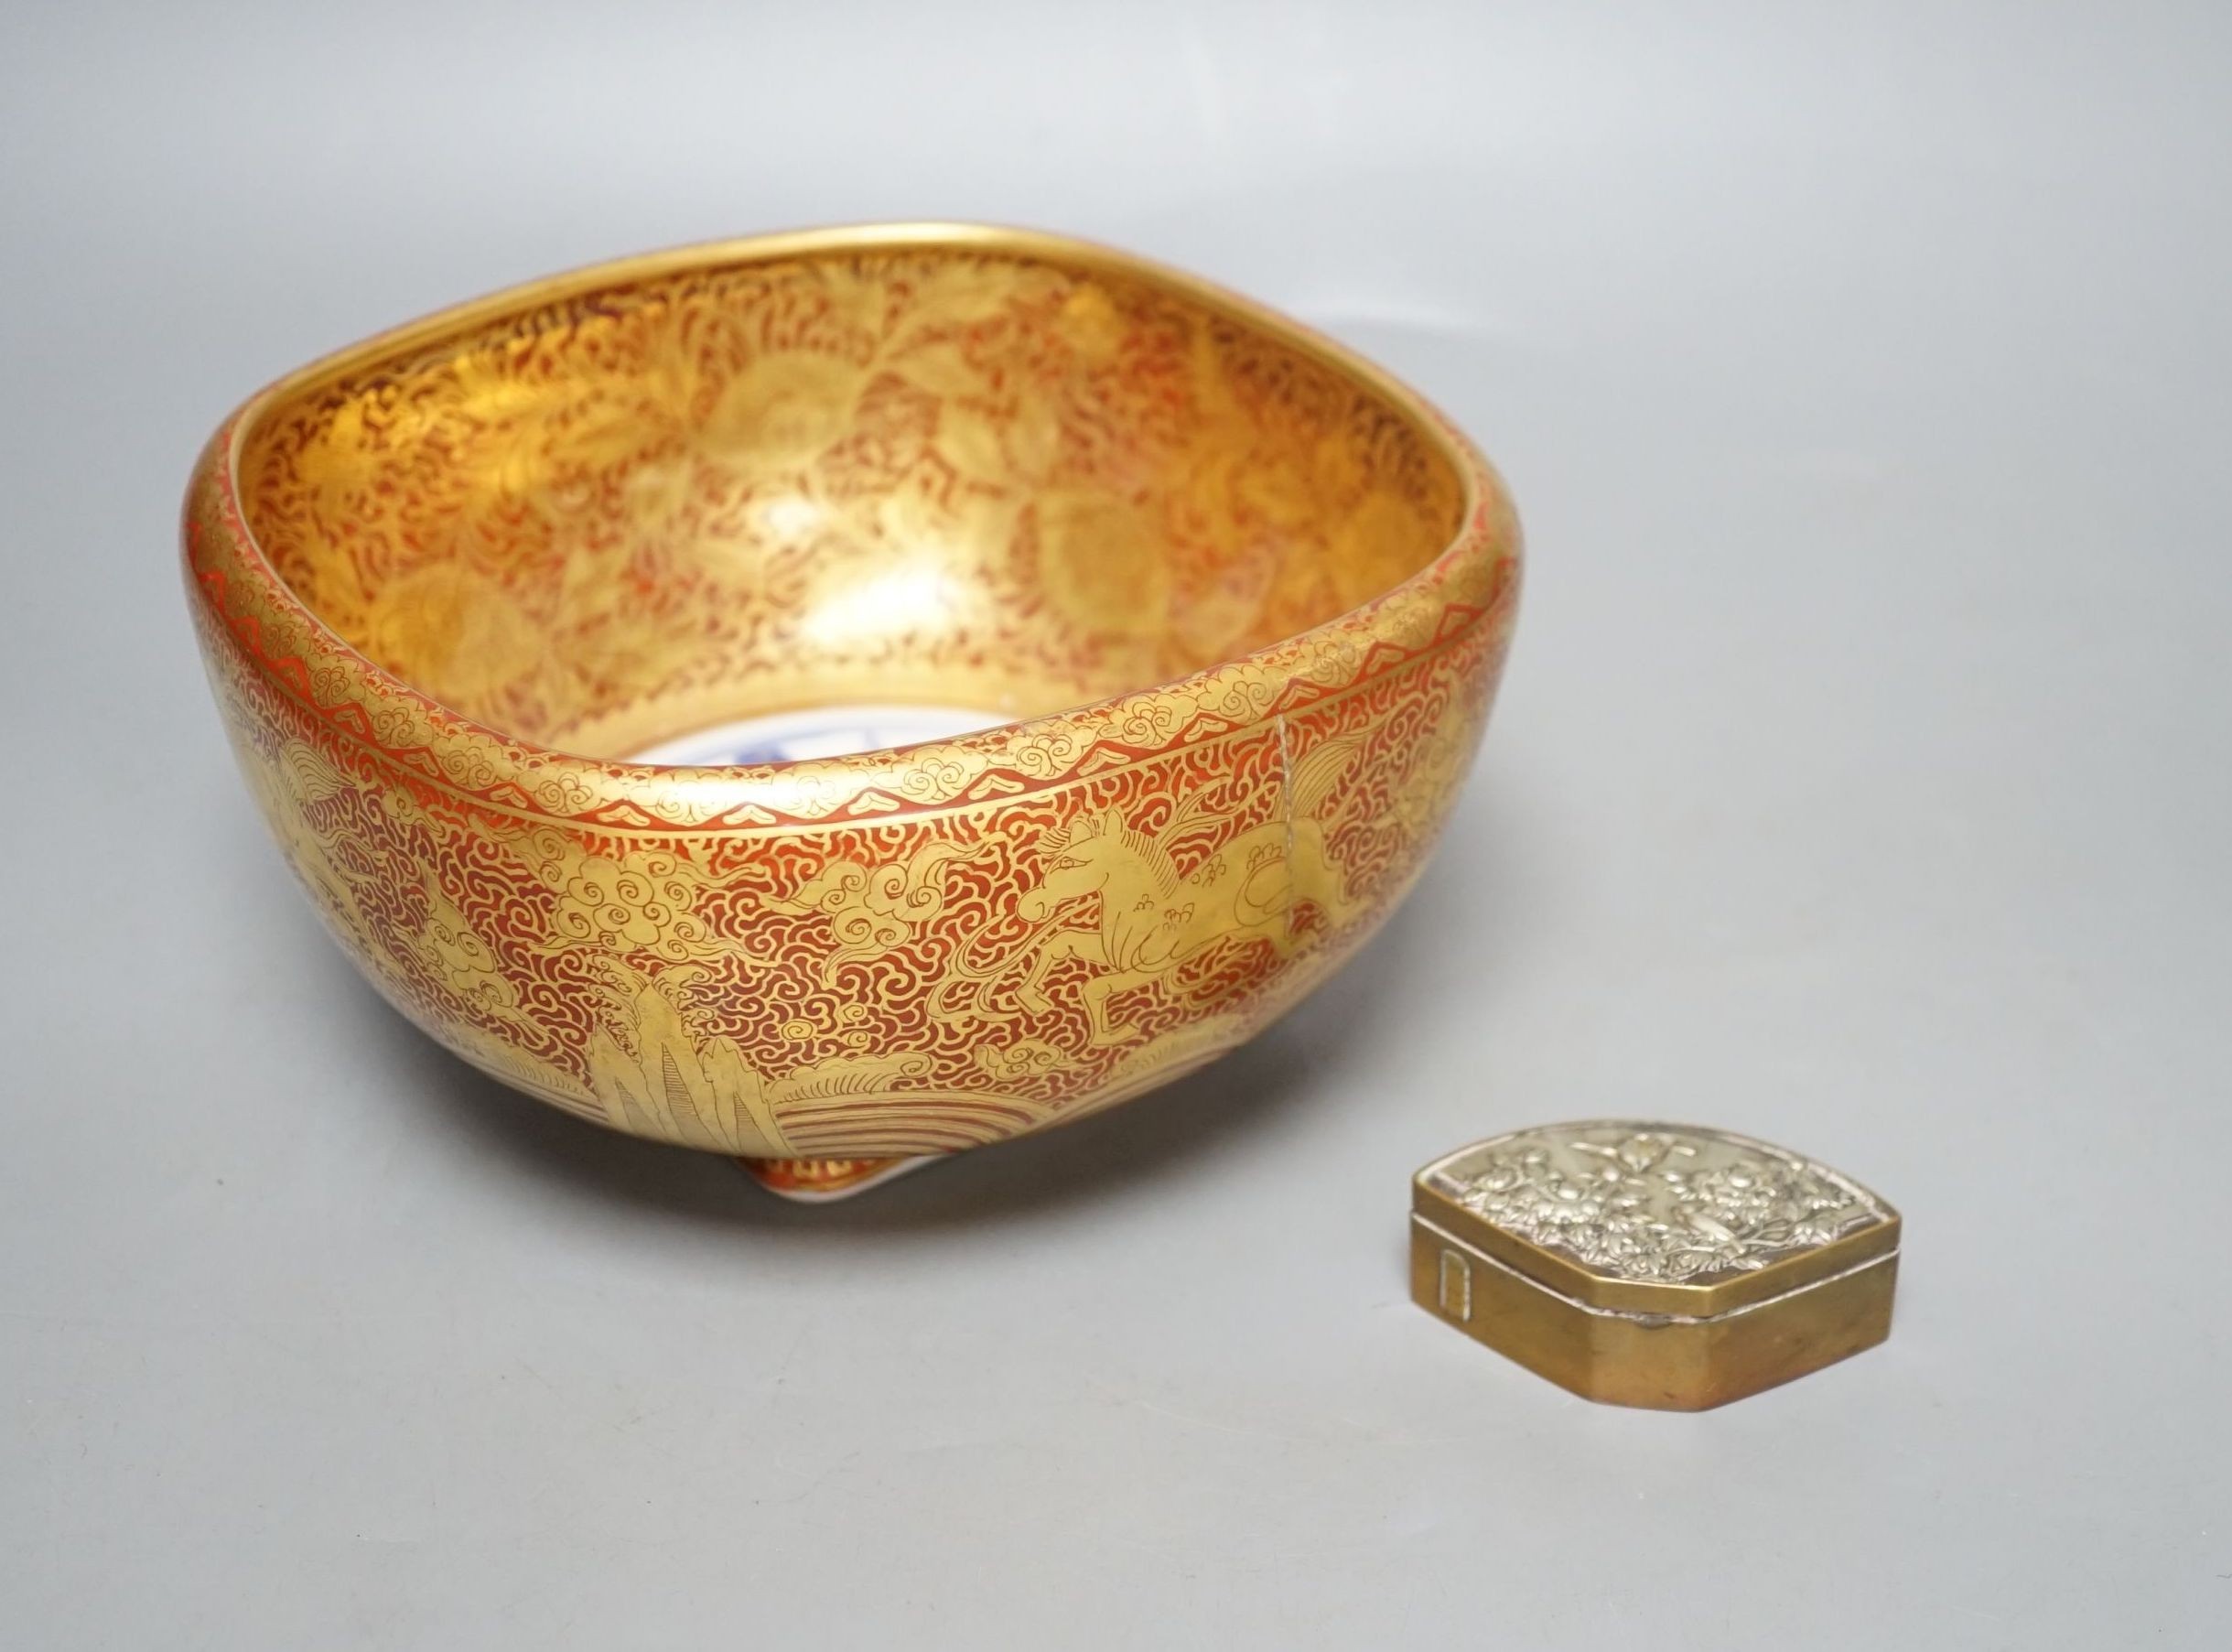 A Japanese mixed metal box and a Kutani style bowl, bowl 17 cms diameter.